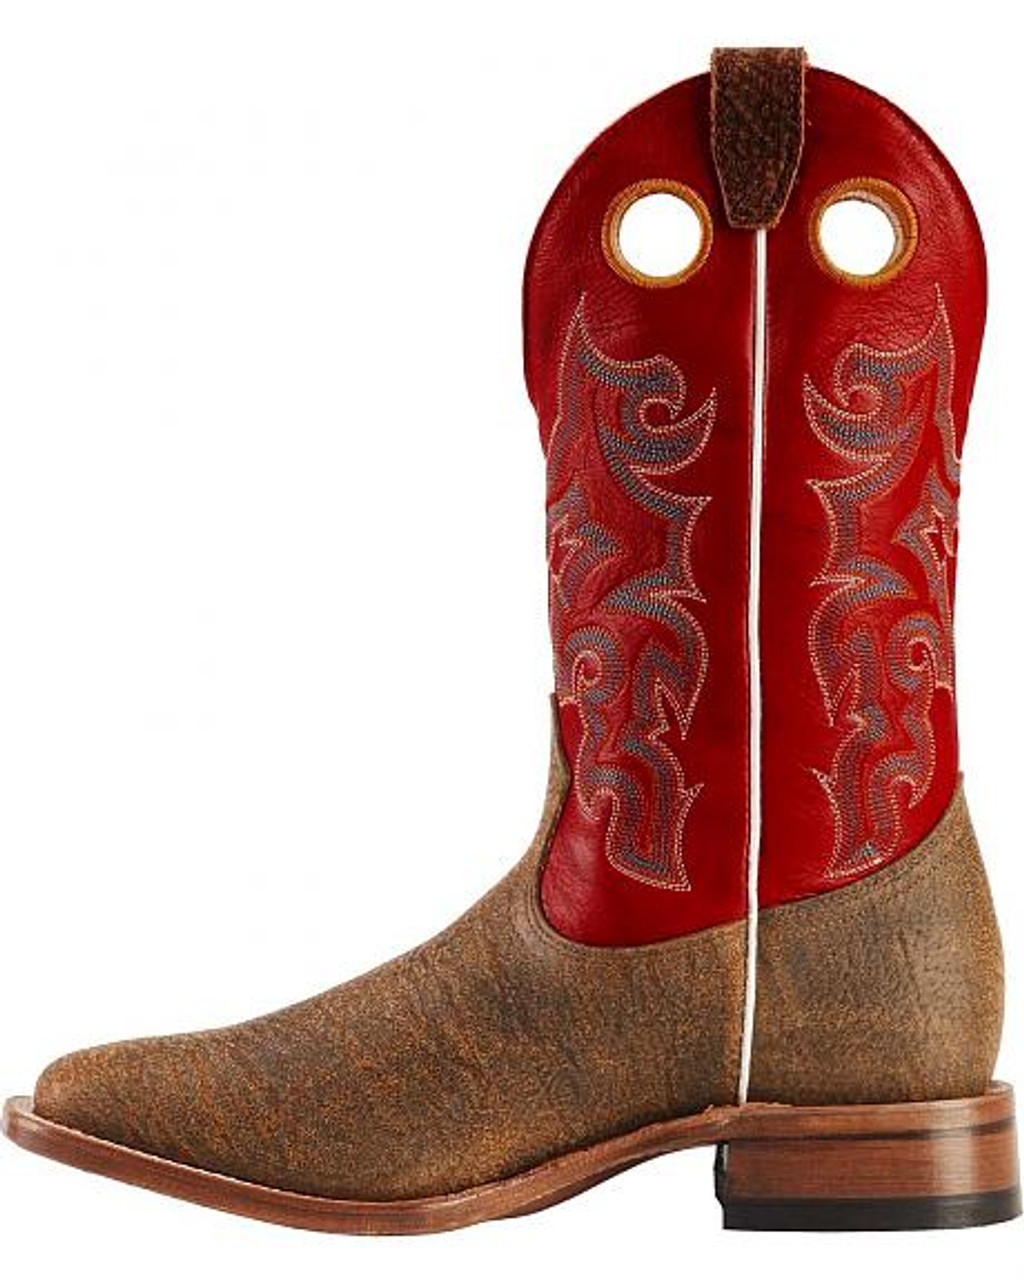 boulet buckaroo boots